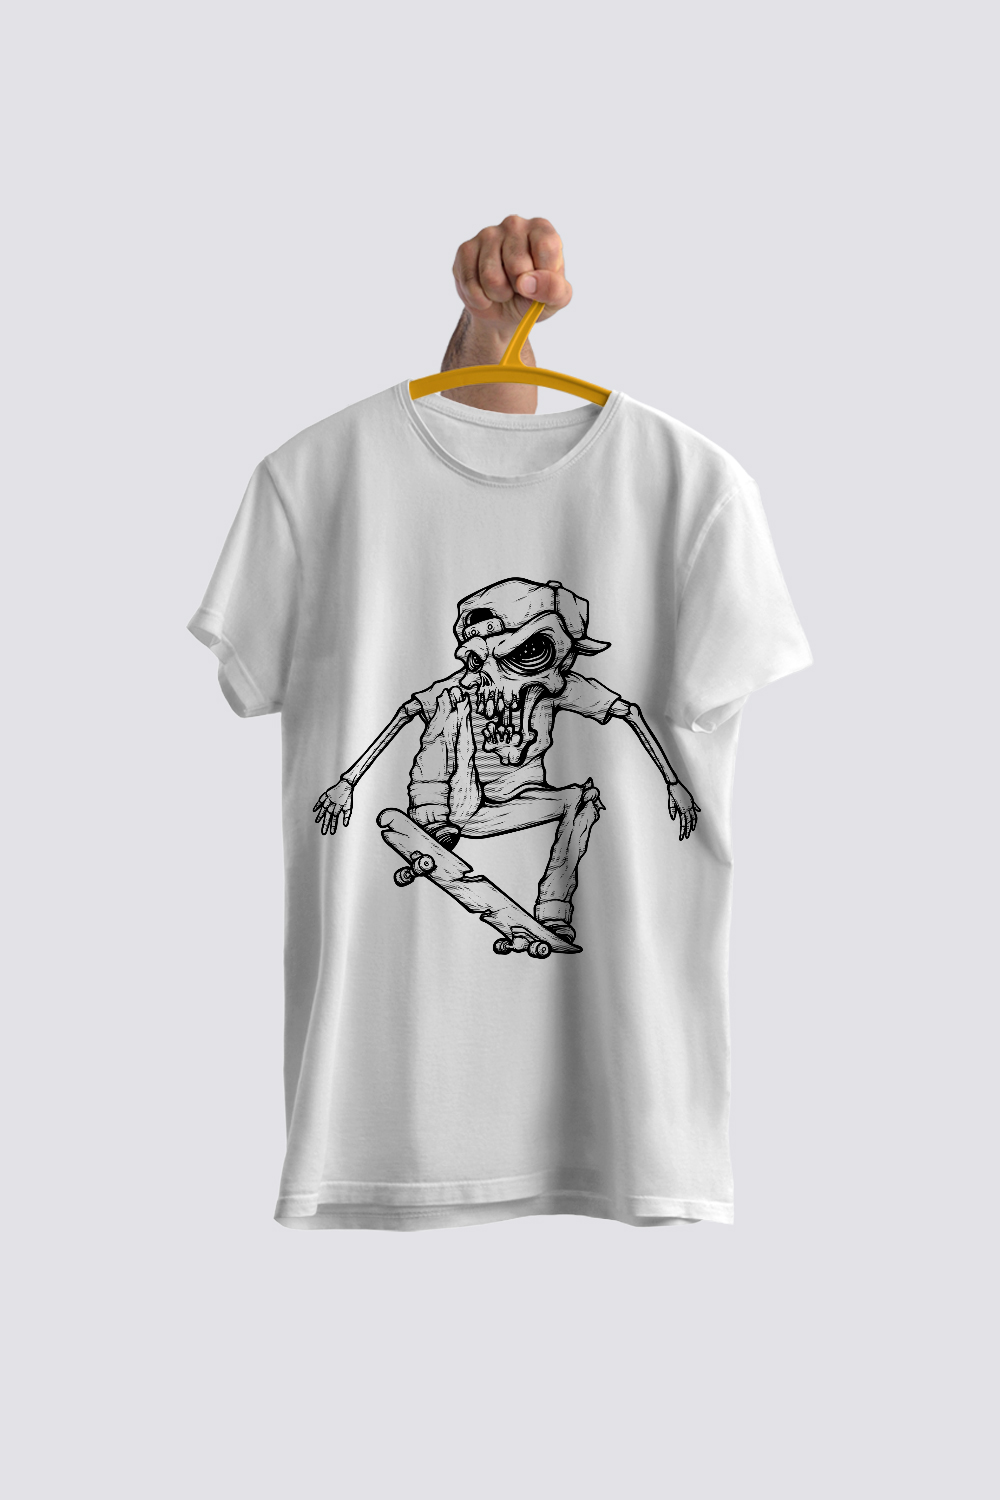 skullskateboardtshirtdesign 788